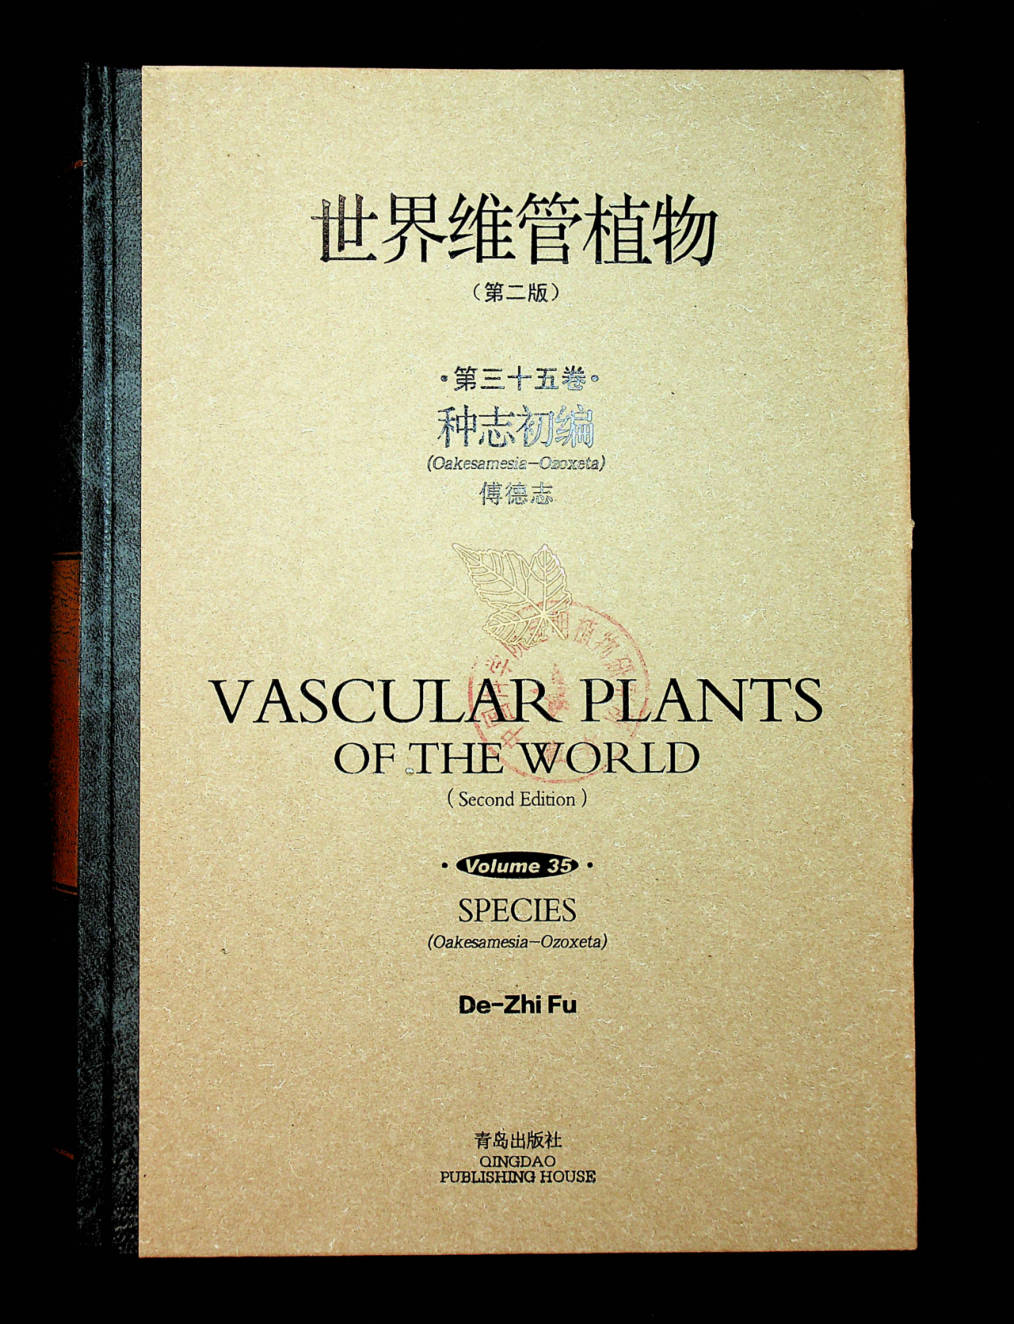 世界维管植物 第二版 第三十五卷 种志初编 (Oakesamesia—Ozoxeta)  VASCULAR PLANTS  OF THE WORLD (Second Edition) Volume 35  SPECKS (Oakesamesia—Ozoxeta)